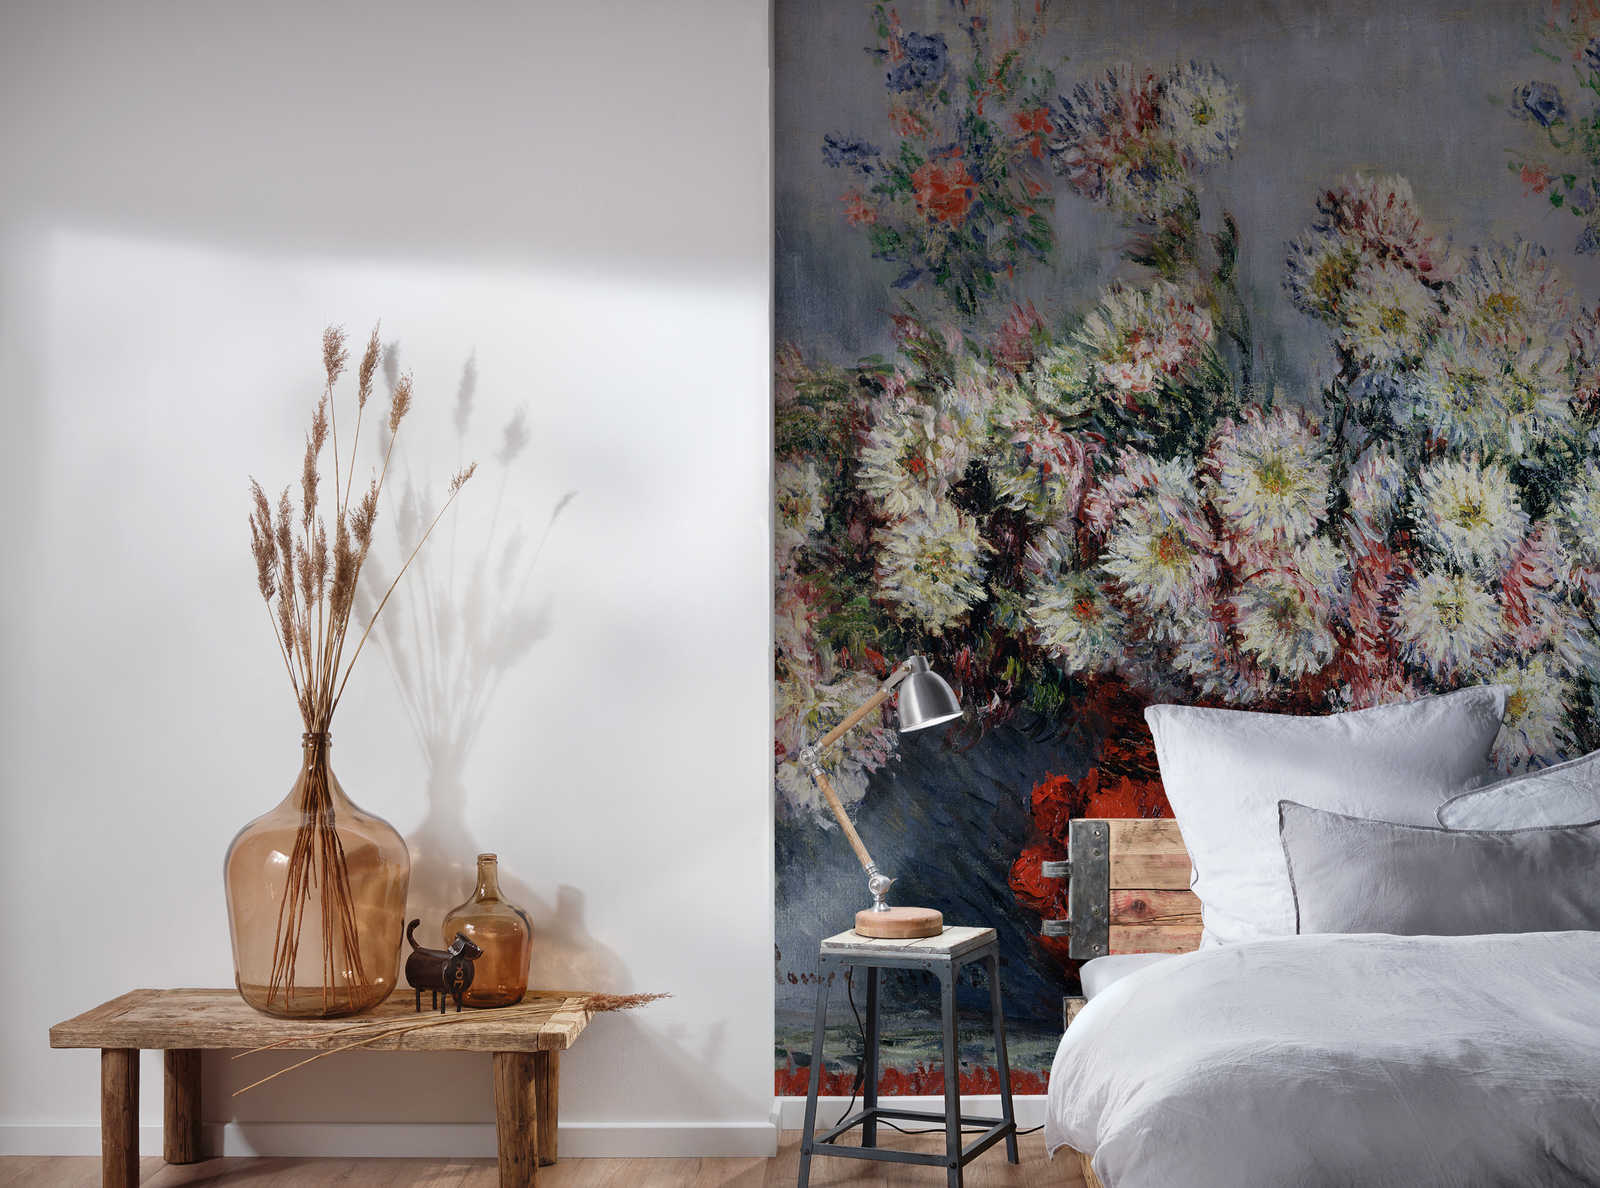             Photo wallpaper "Chrysanthemums" by Claude Monet
        